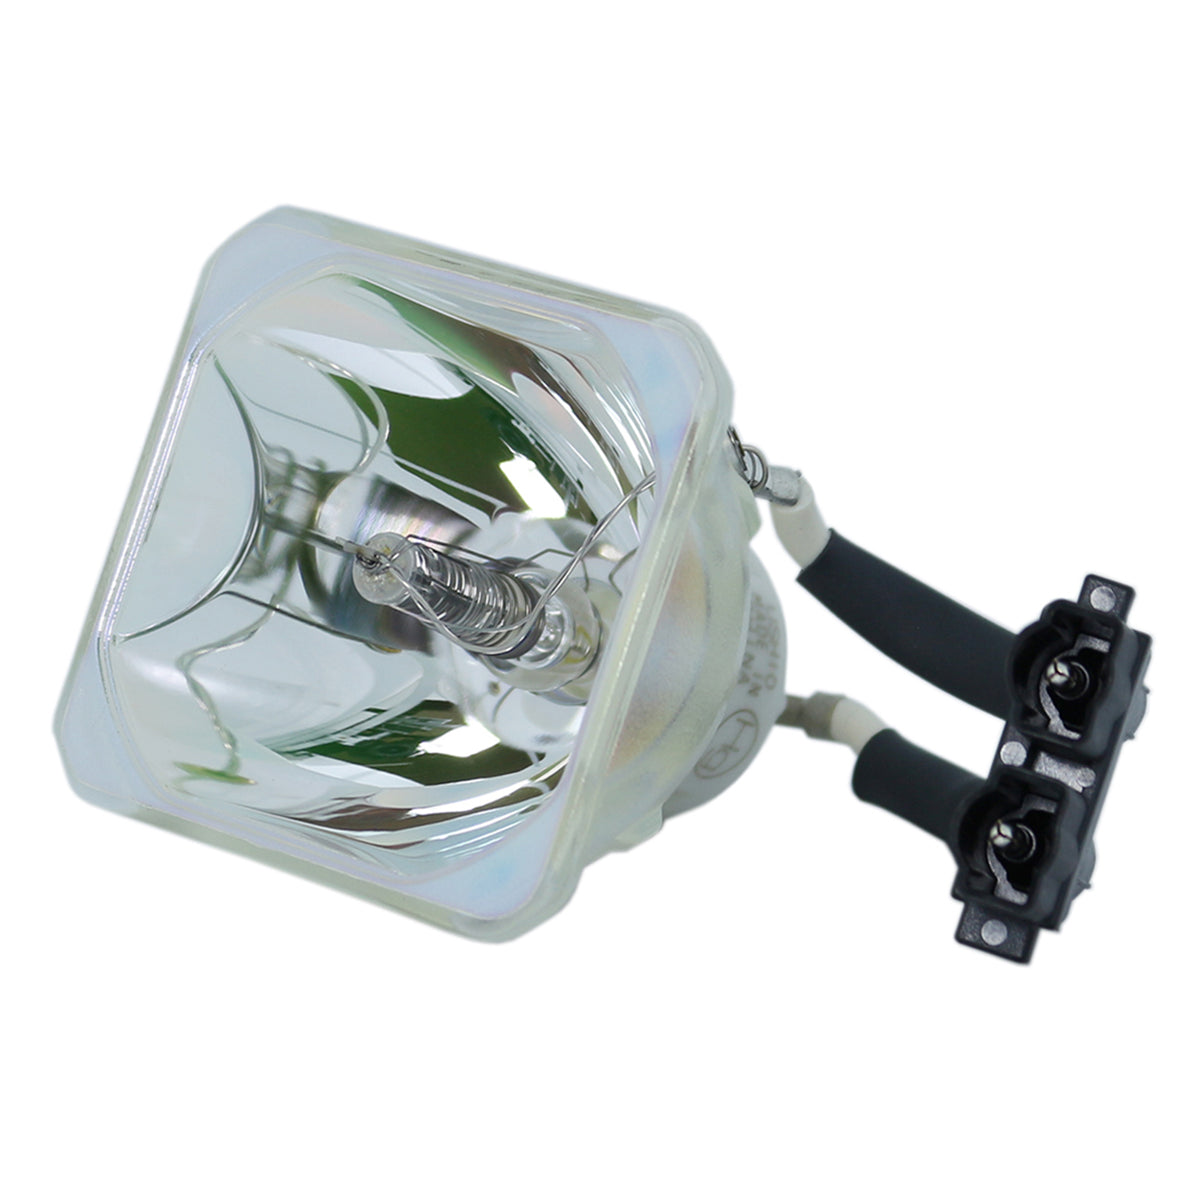 Geha 60-200139 Ushio Projector Bare Lamp